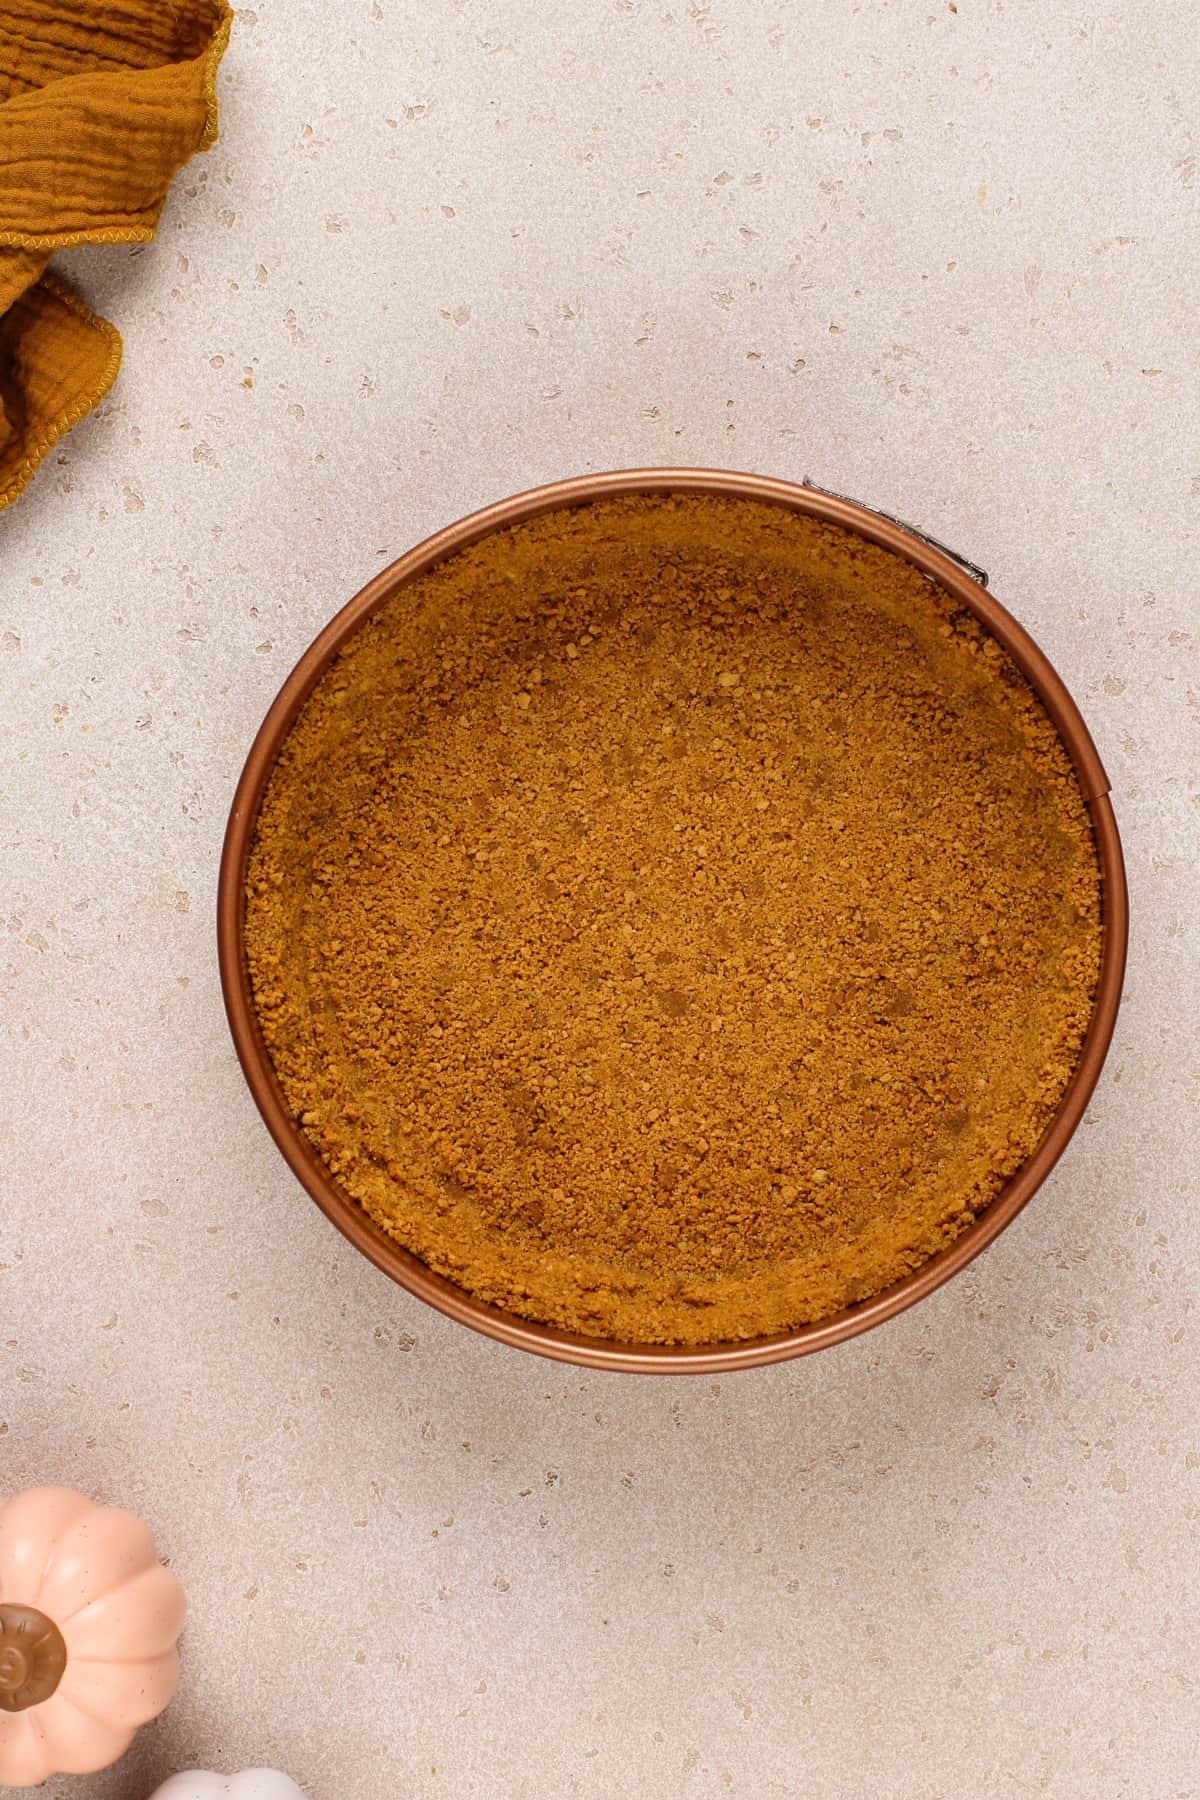 Gingersnap crust in a springform pan.